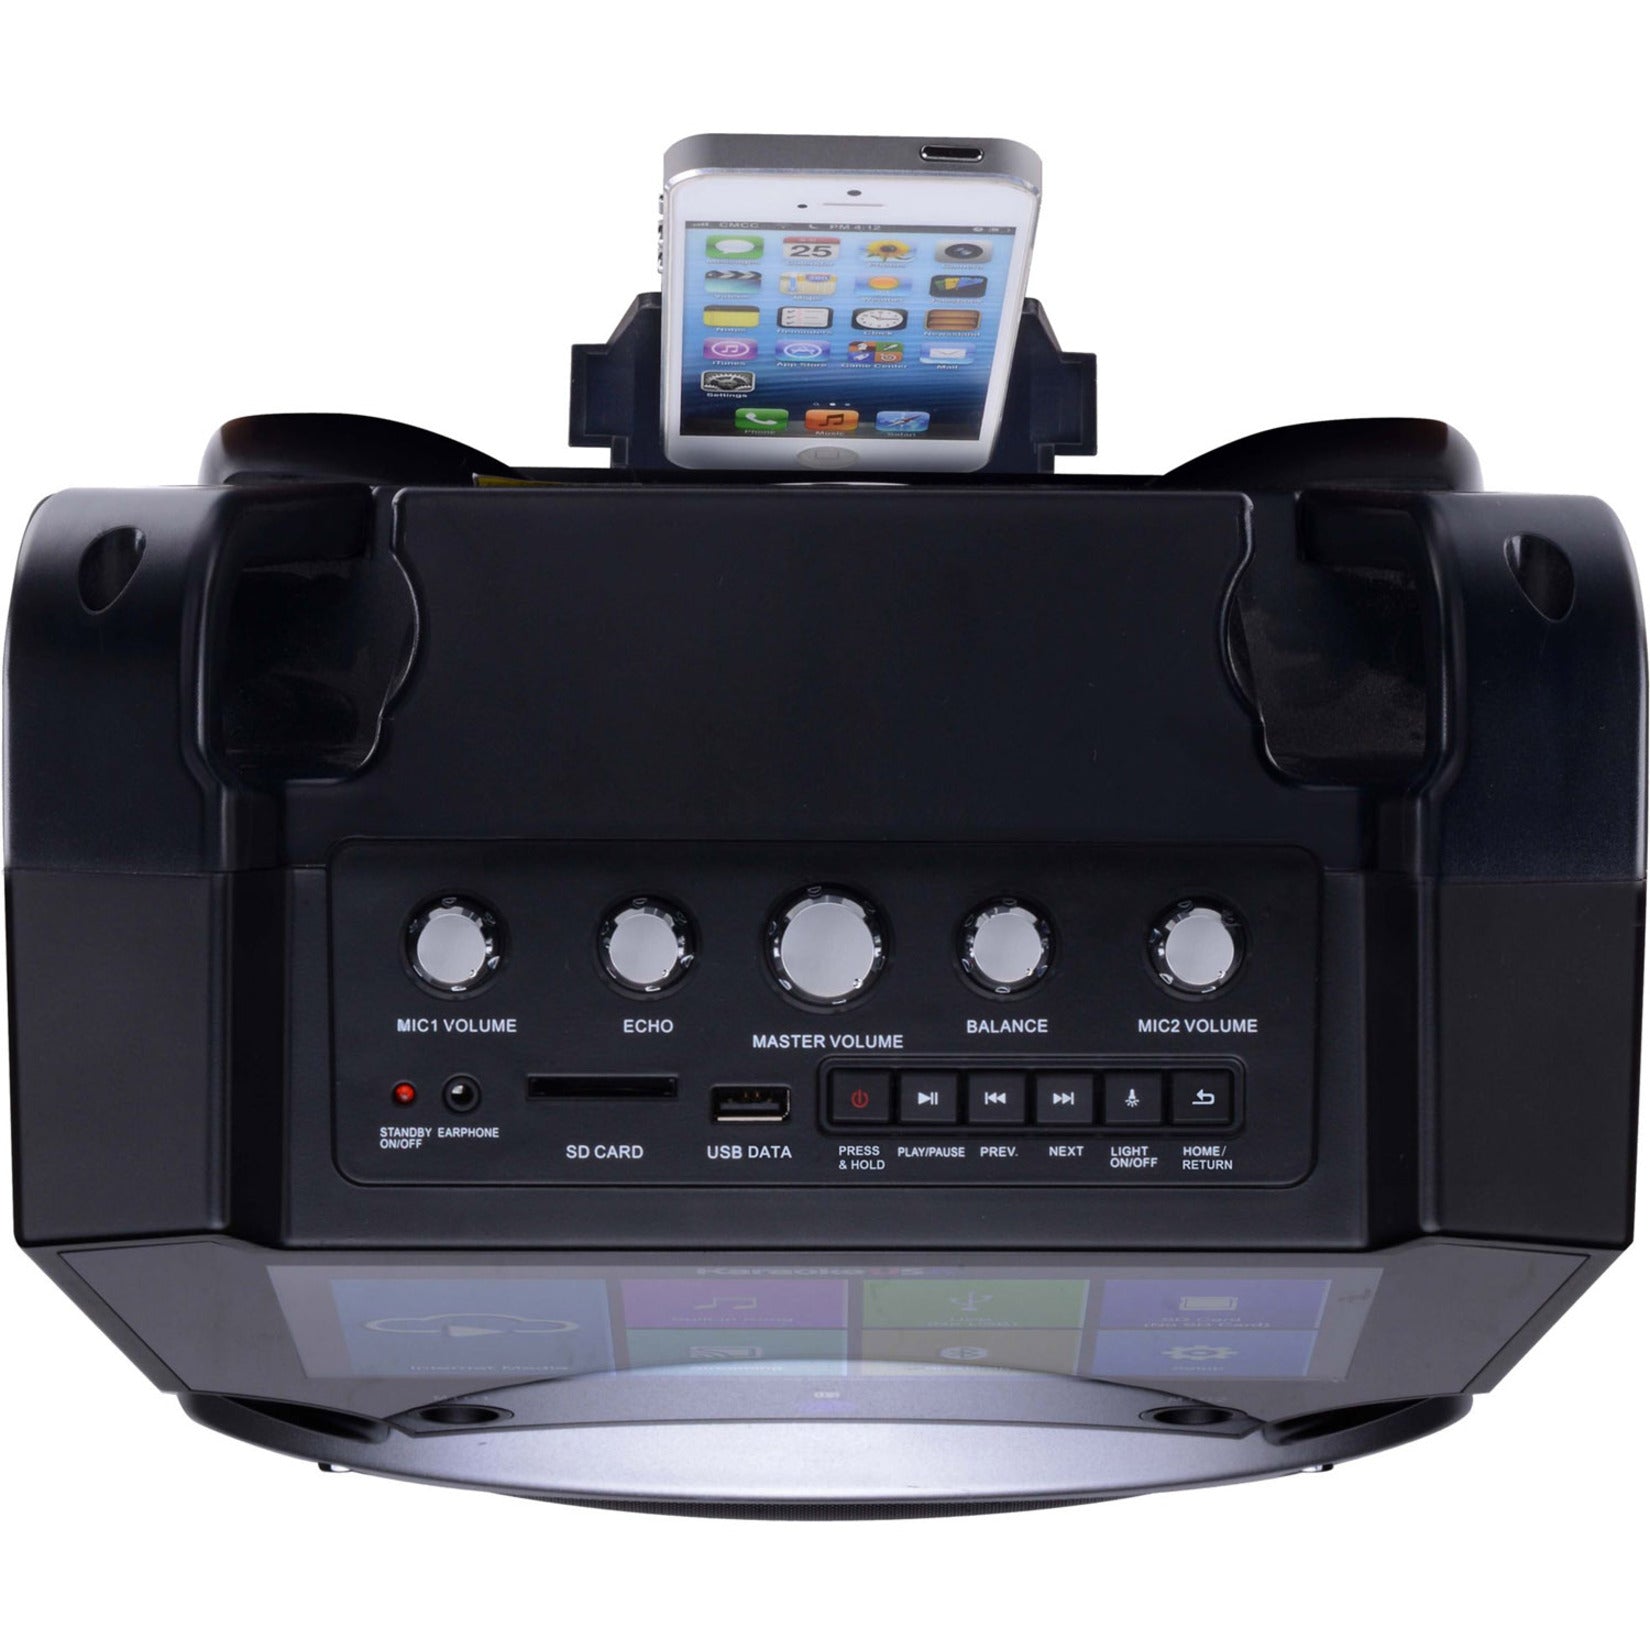 Karaoke USA WK849 Karaoke System, Universal Cradle, 2 Microphones, 120V Power Adaptor, Remote Control